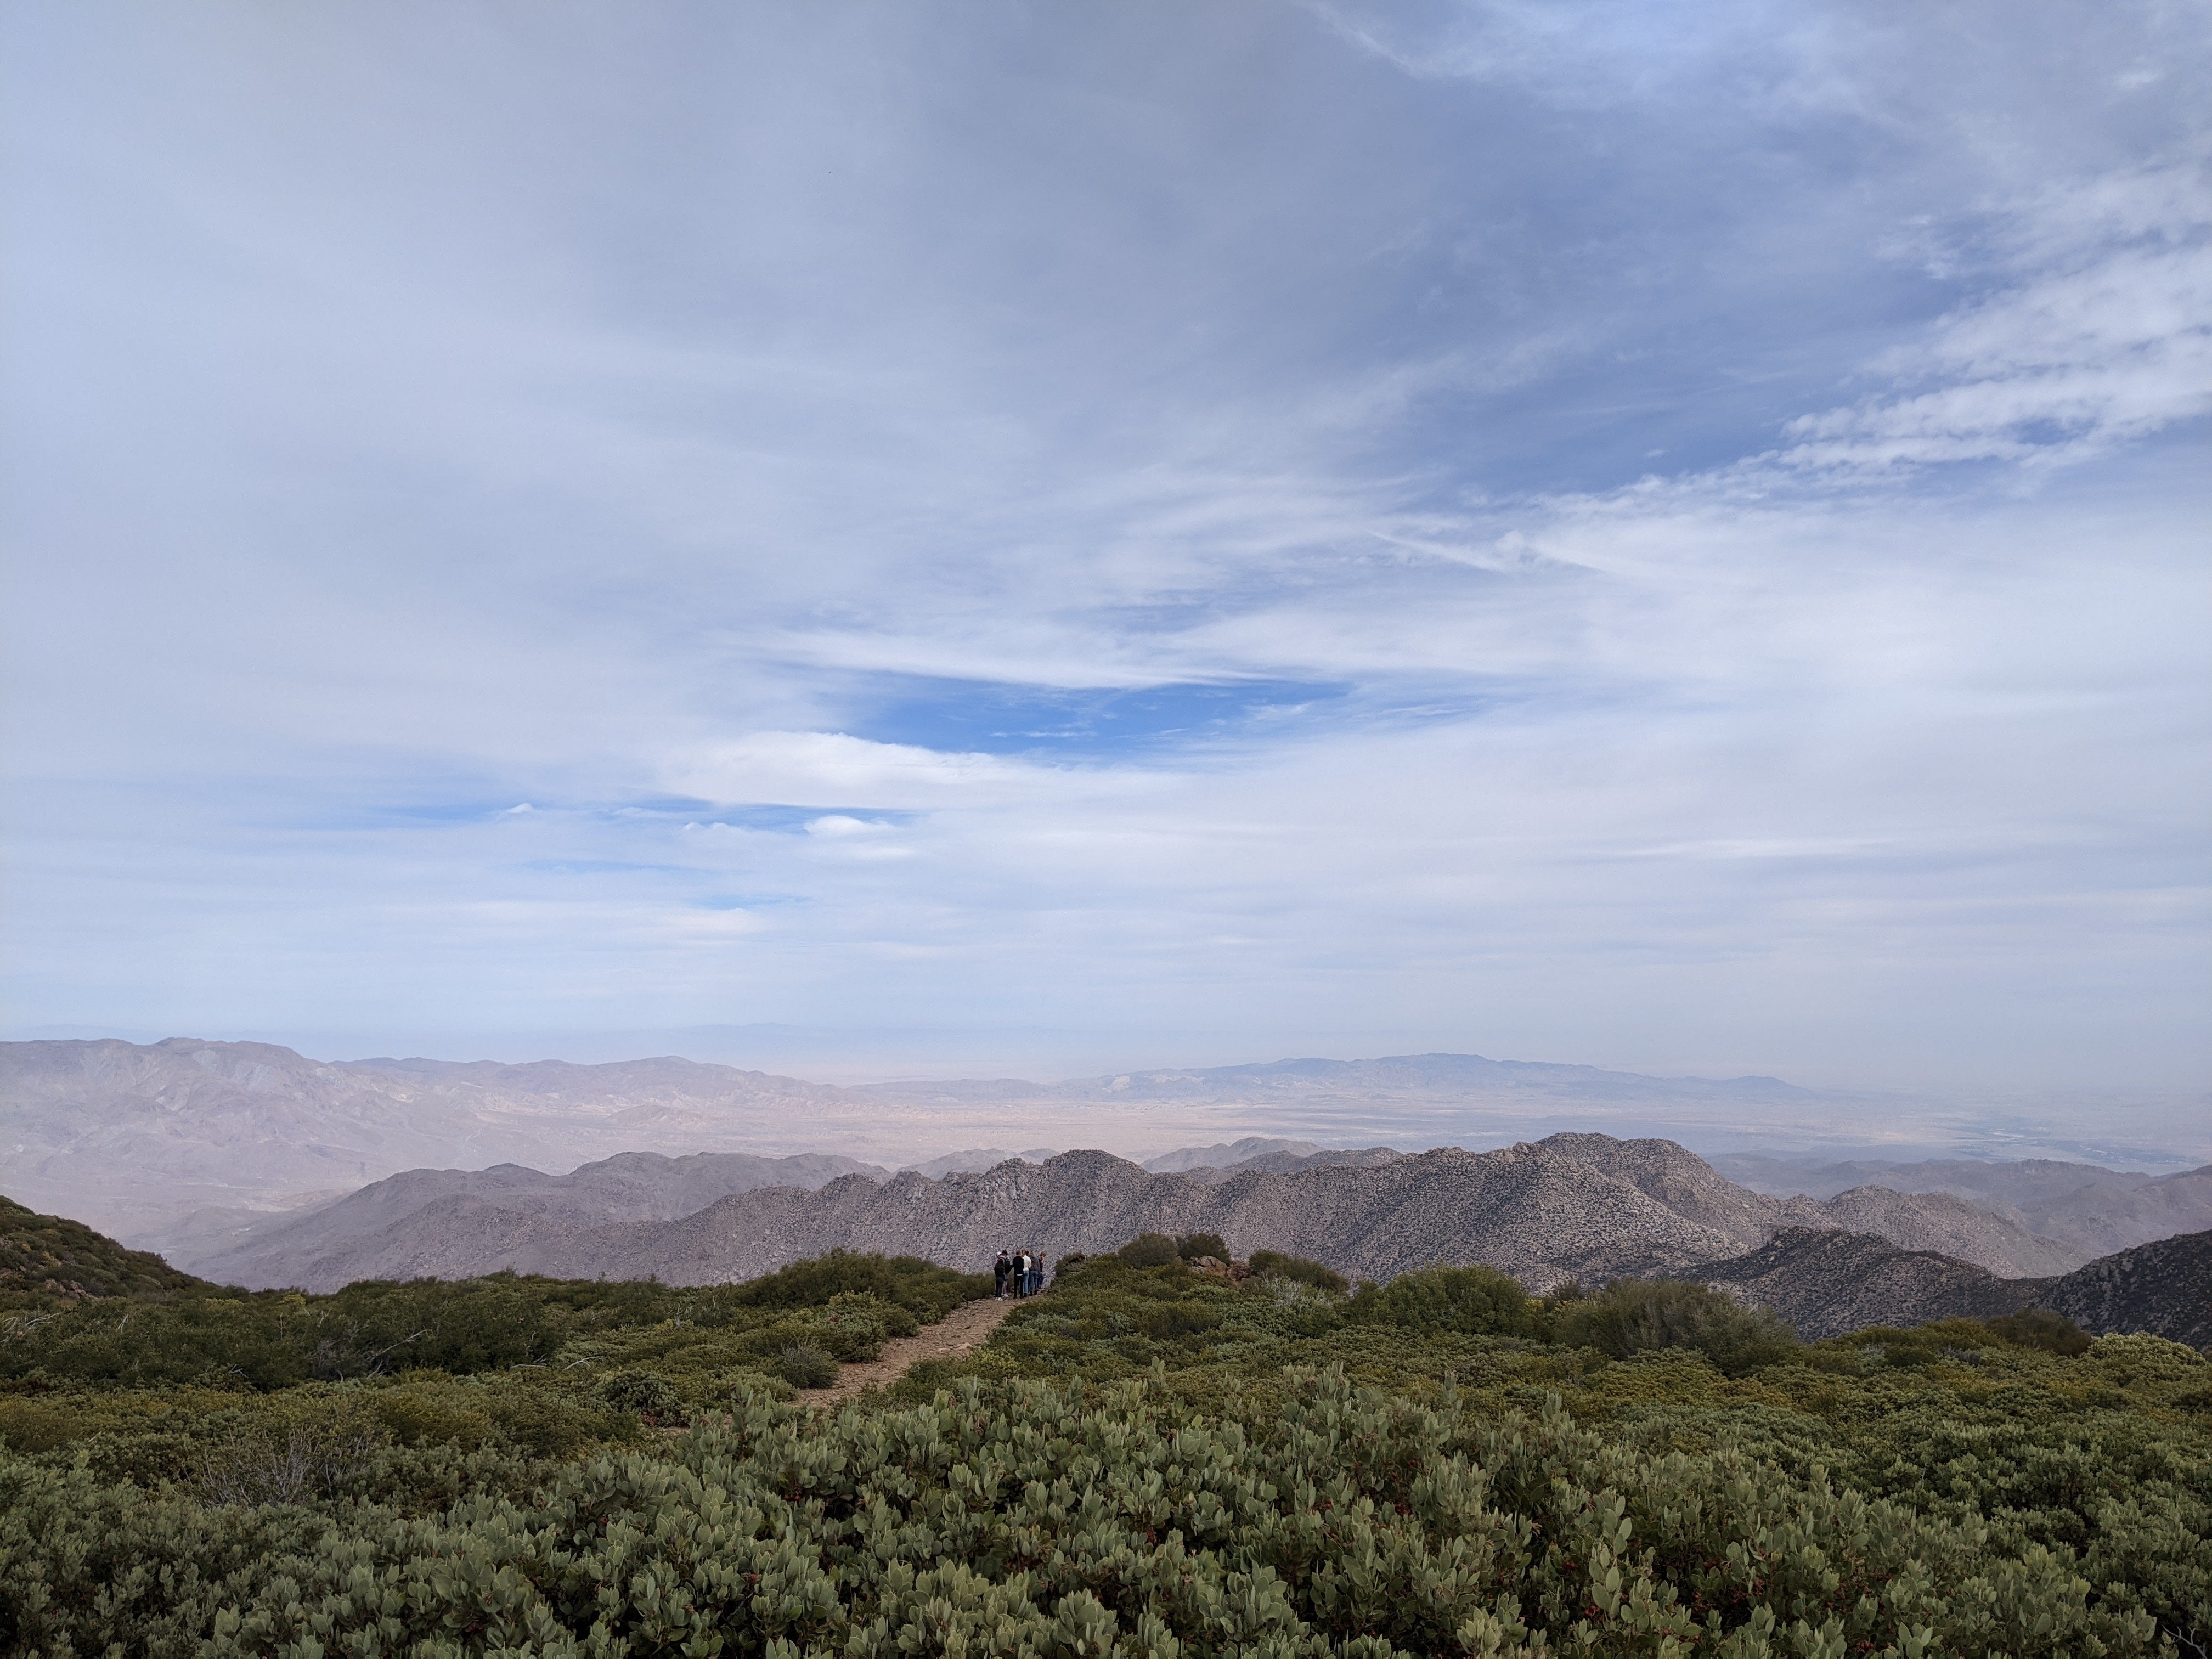 Vistas on the Desert View Trail